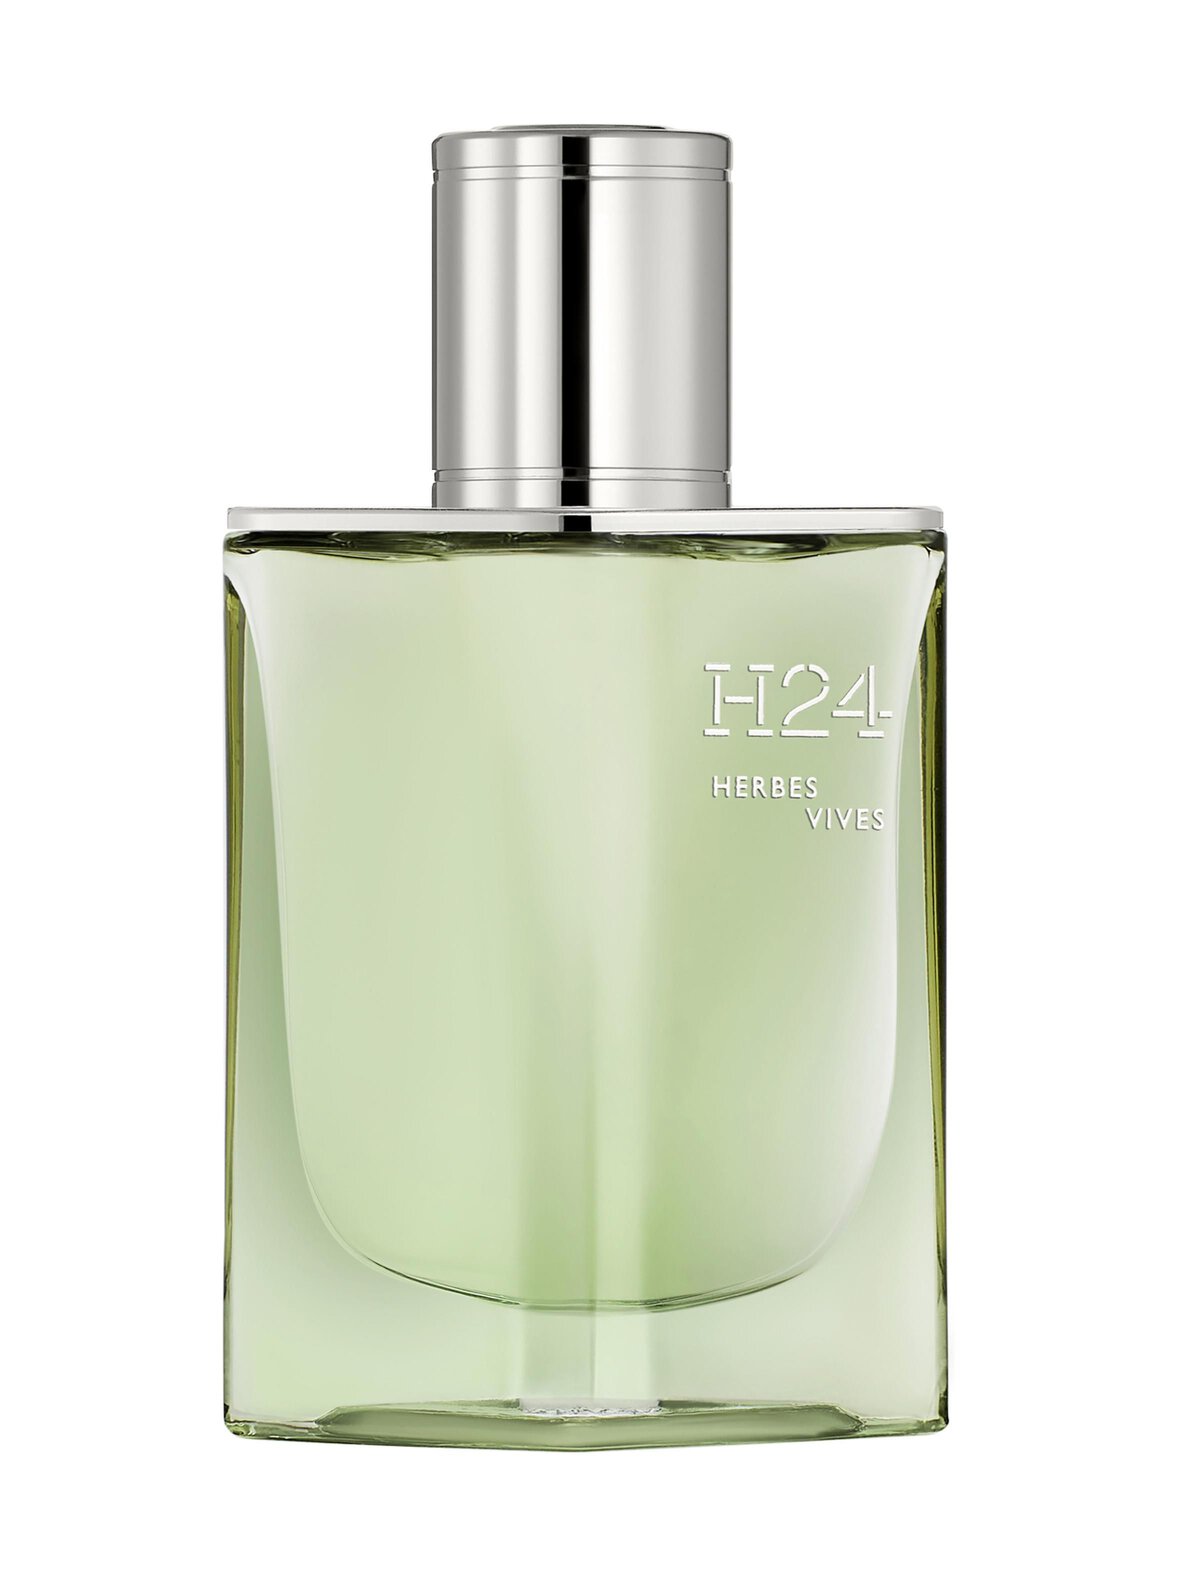 HERMÈS H24 herbes vives eau de parfum -tuoksu, uudeelleentäytettävä